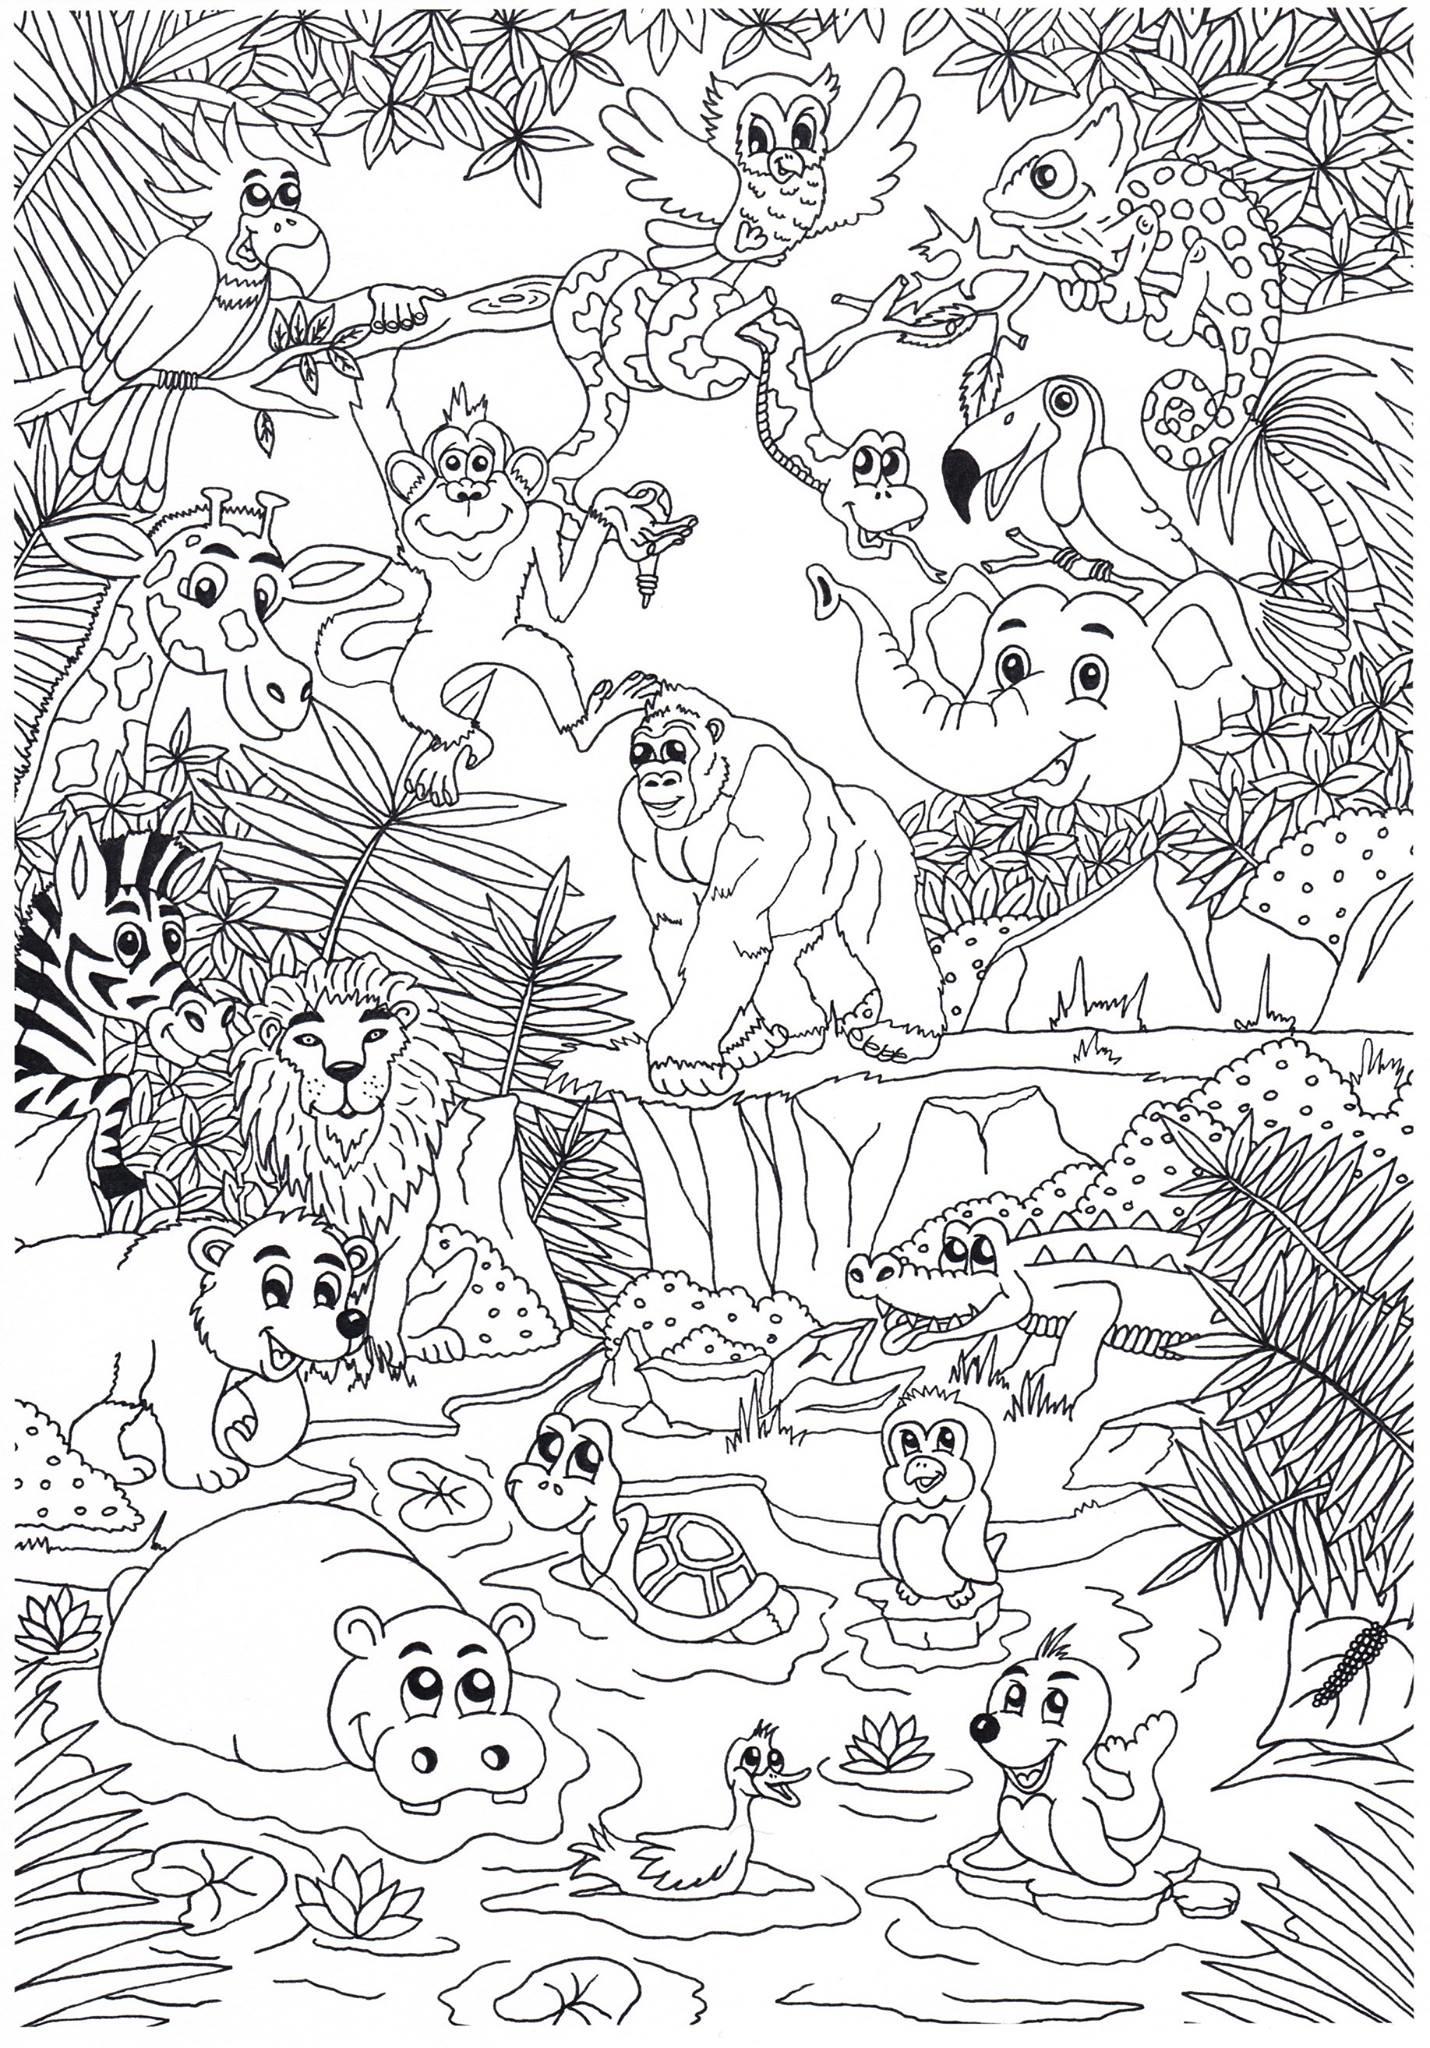 Dibujo para colorear animales en la selva